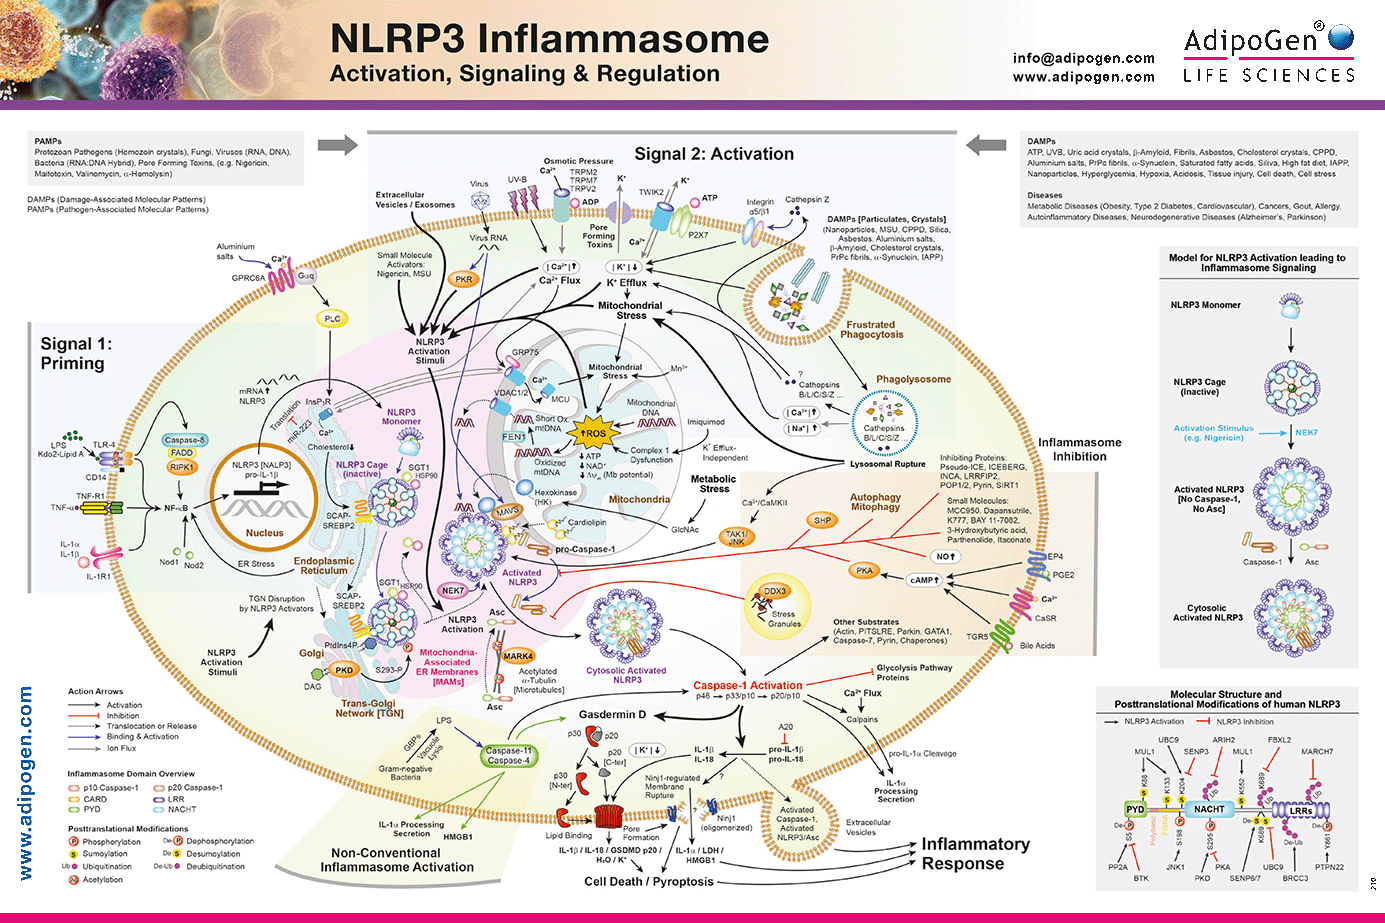 AdipoGen-NLRP3-Inflammasome-Poster